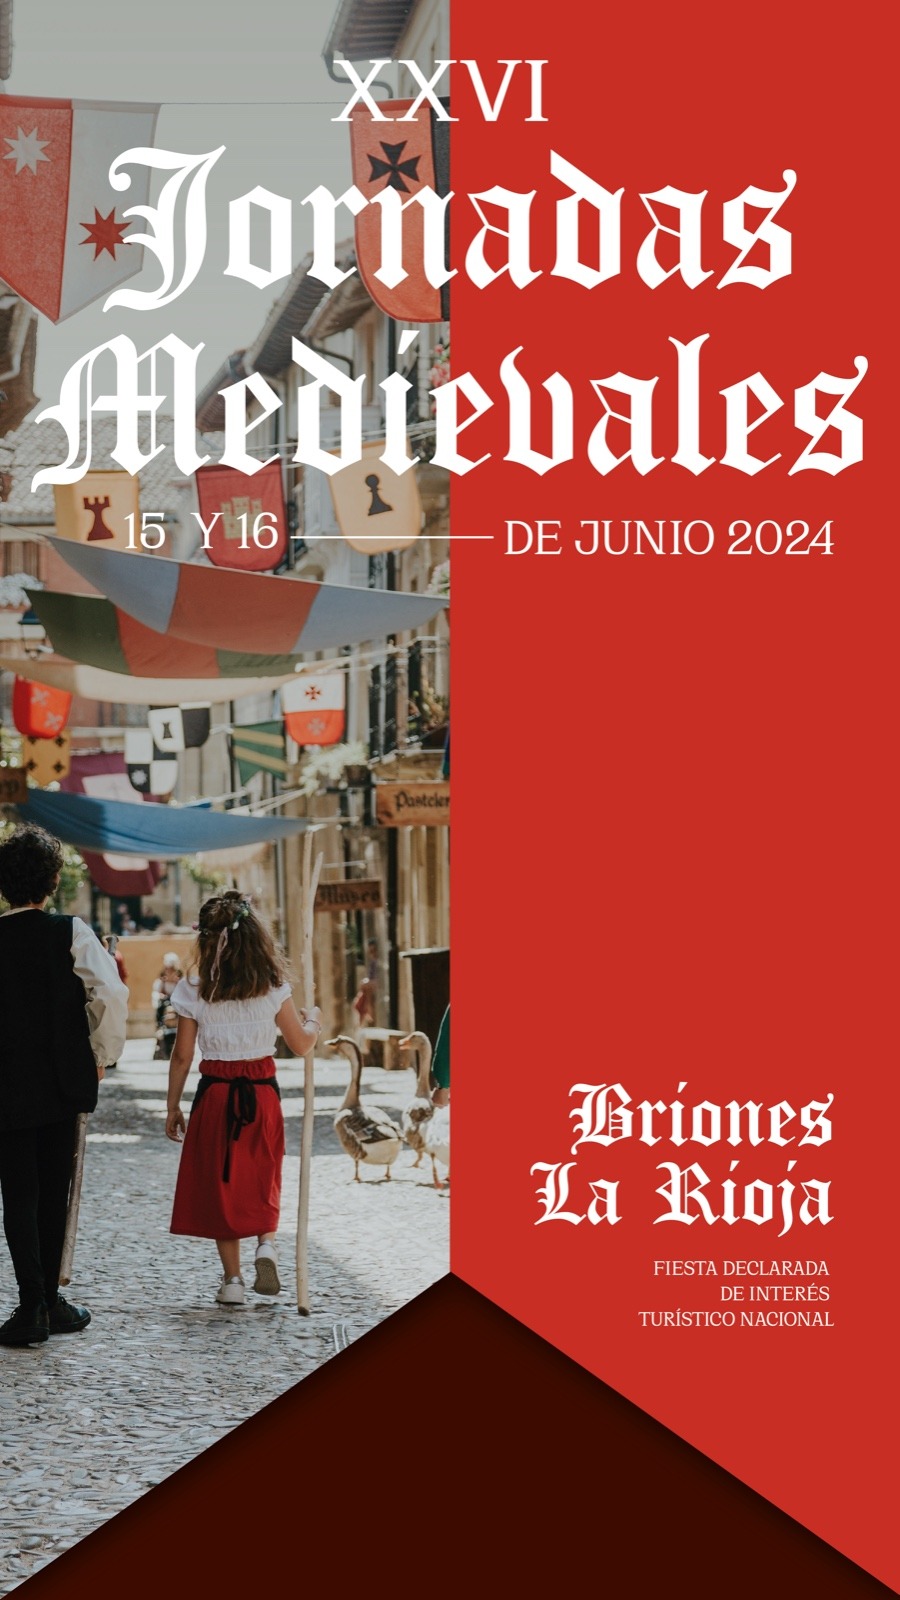 XXVI Jornadas medievales de Briones